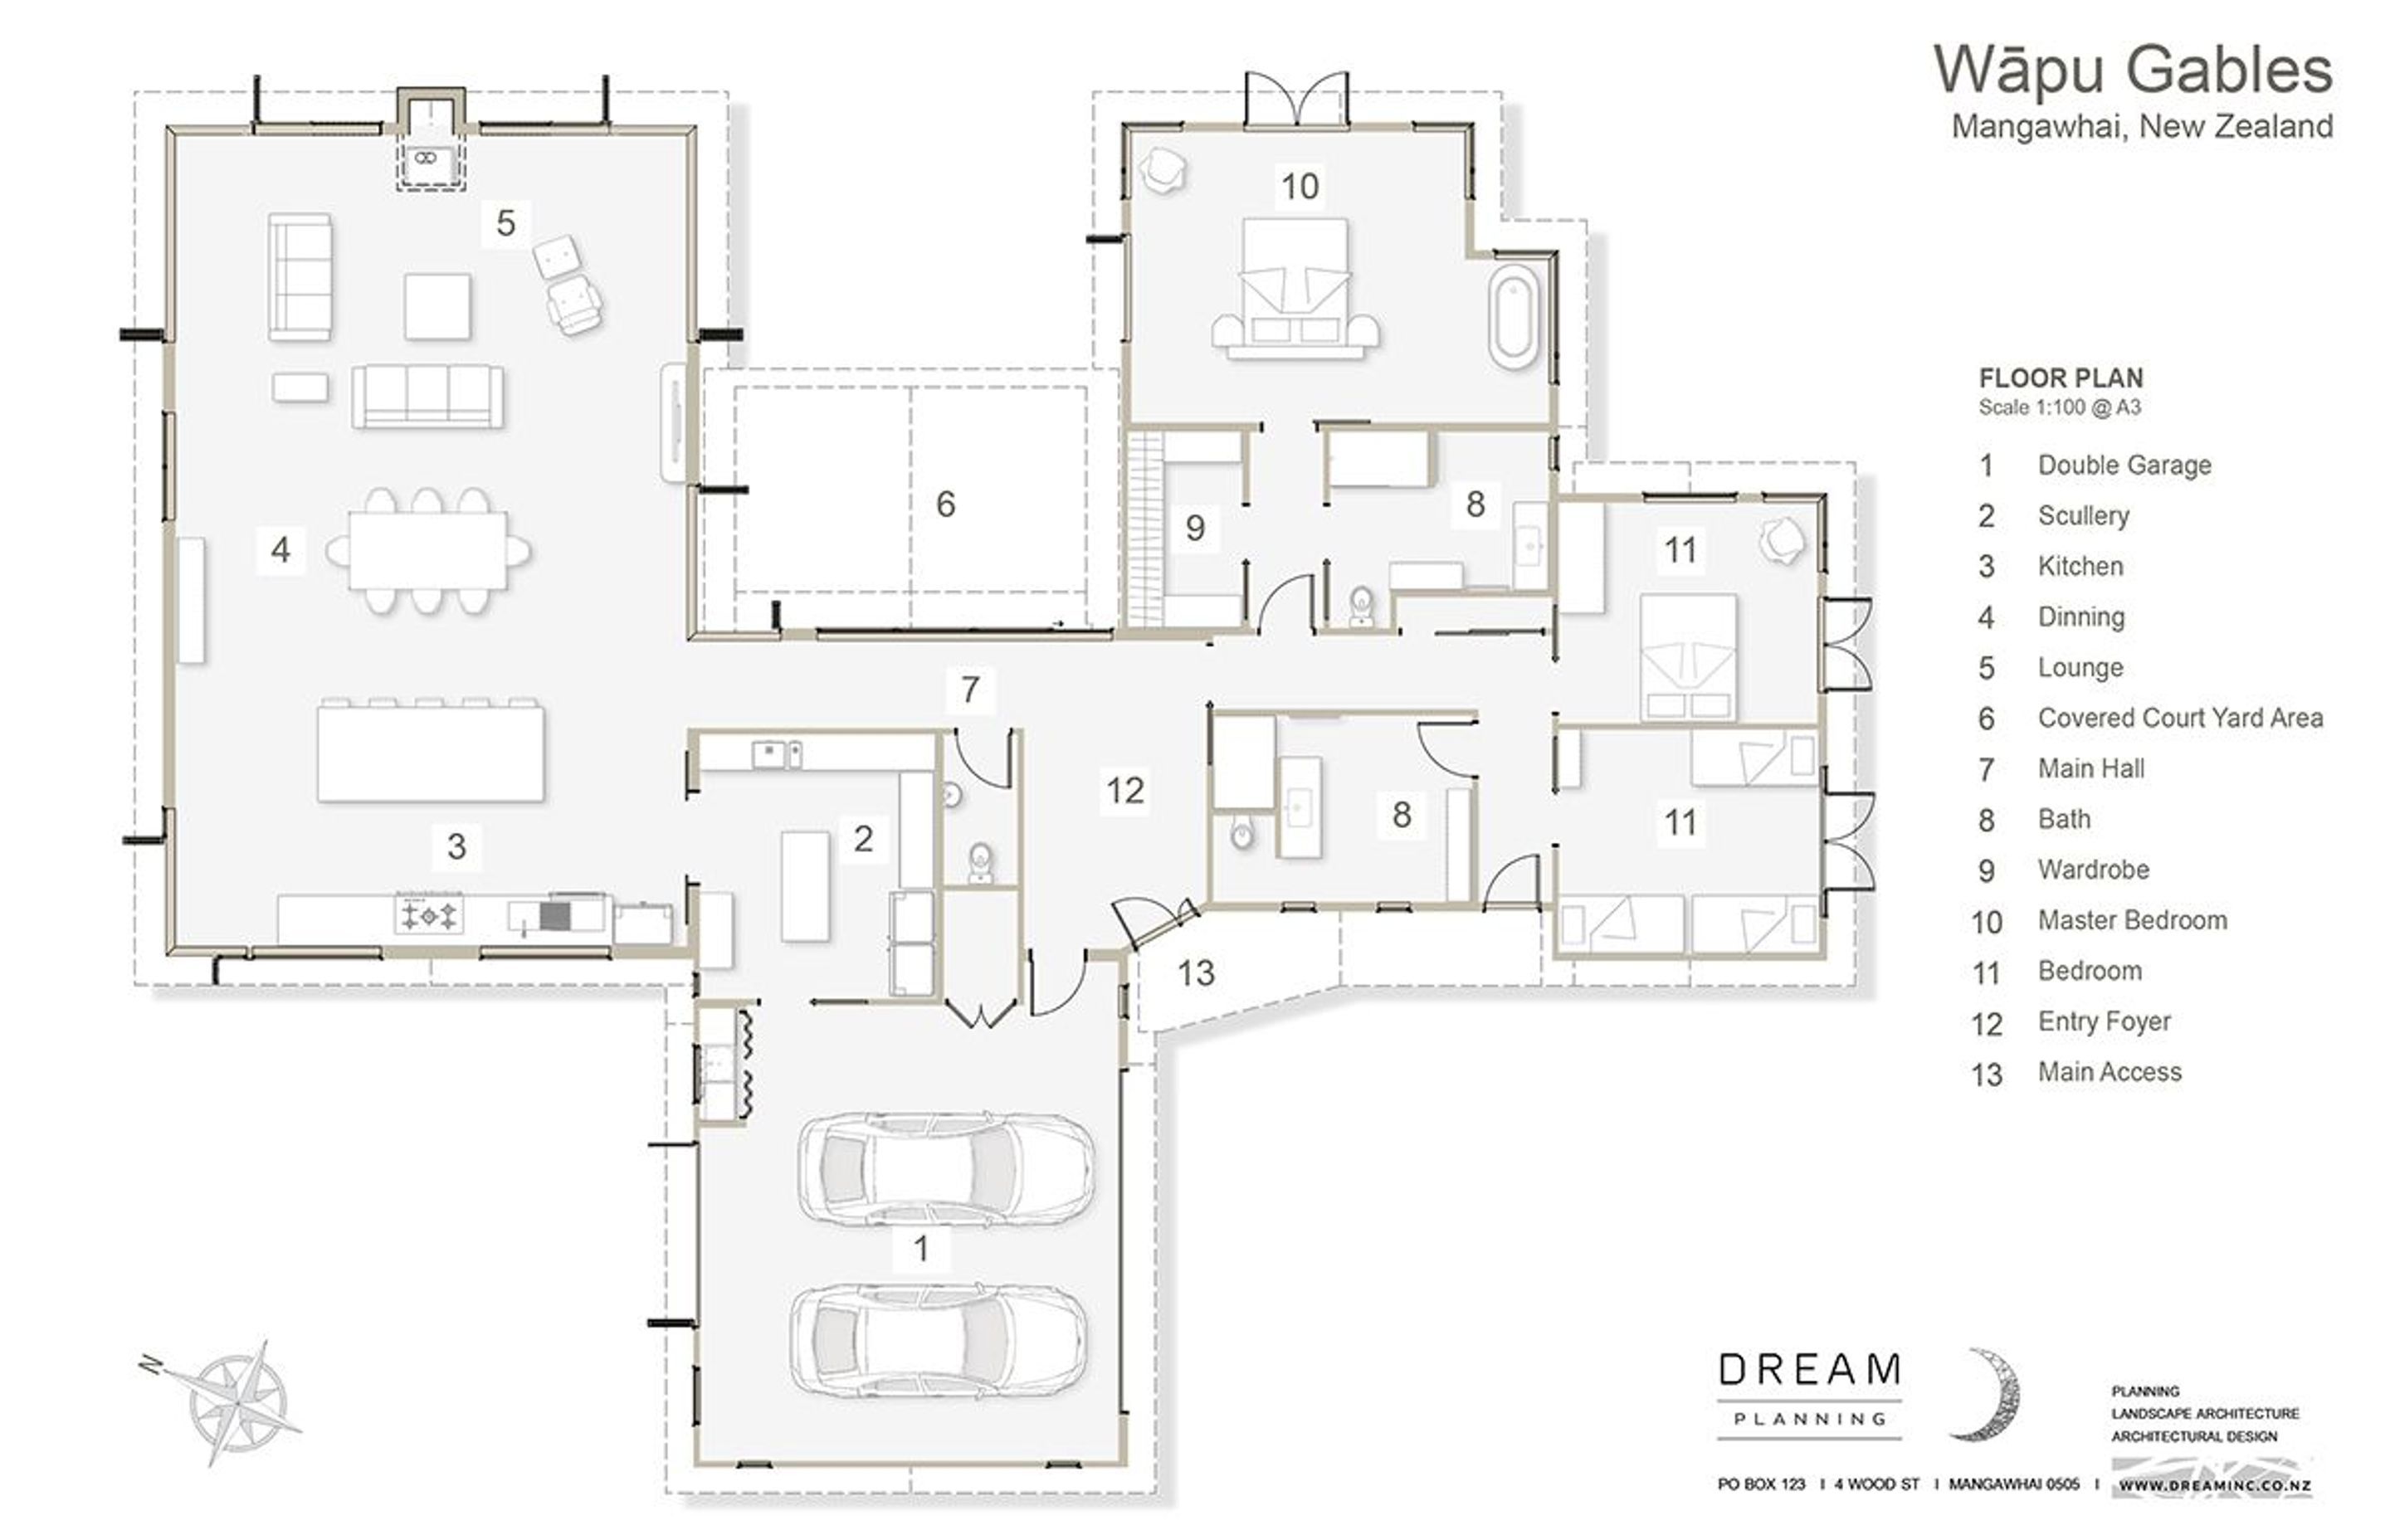 Floor plan by Dream Planning.